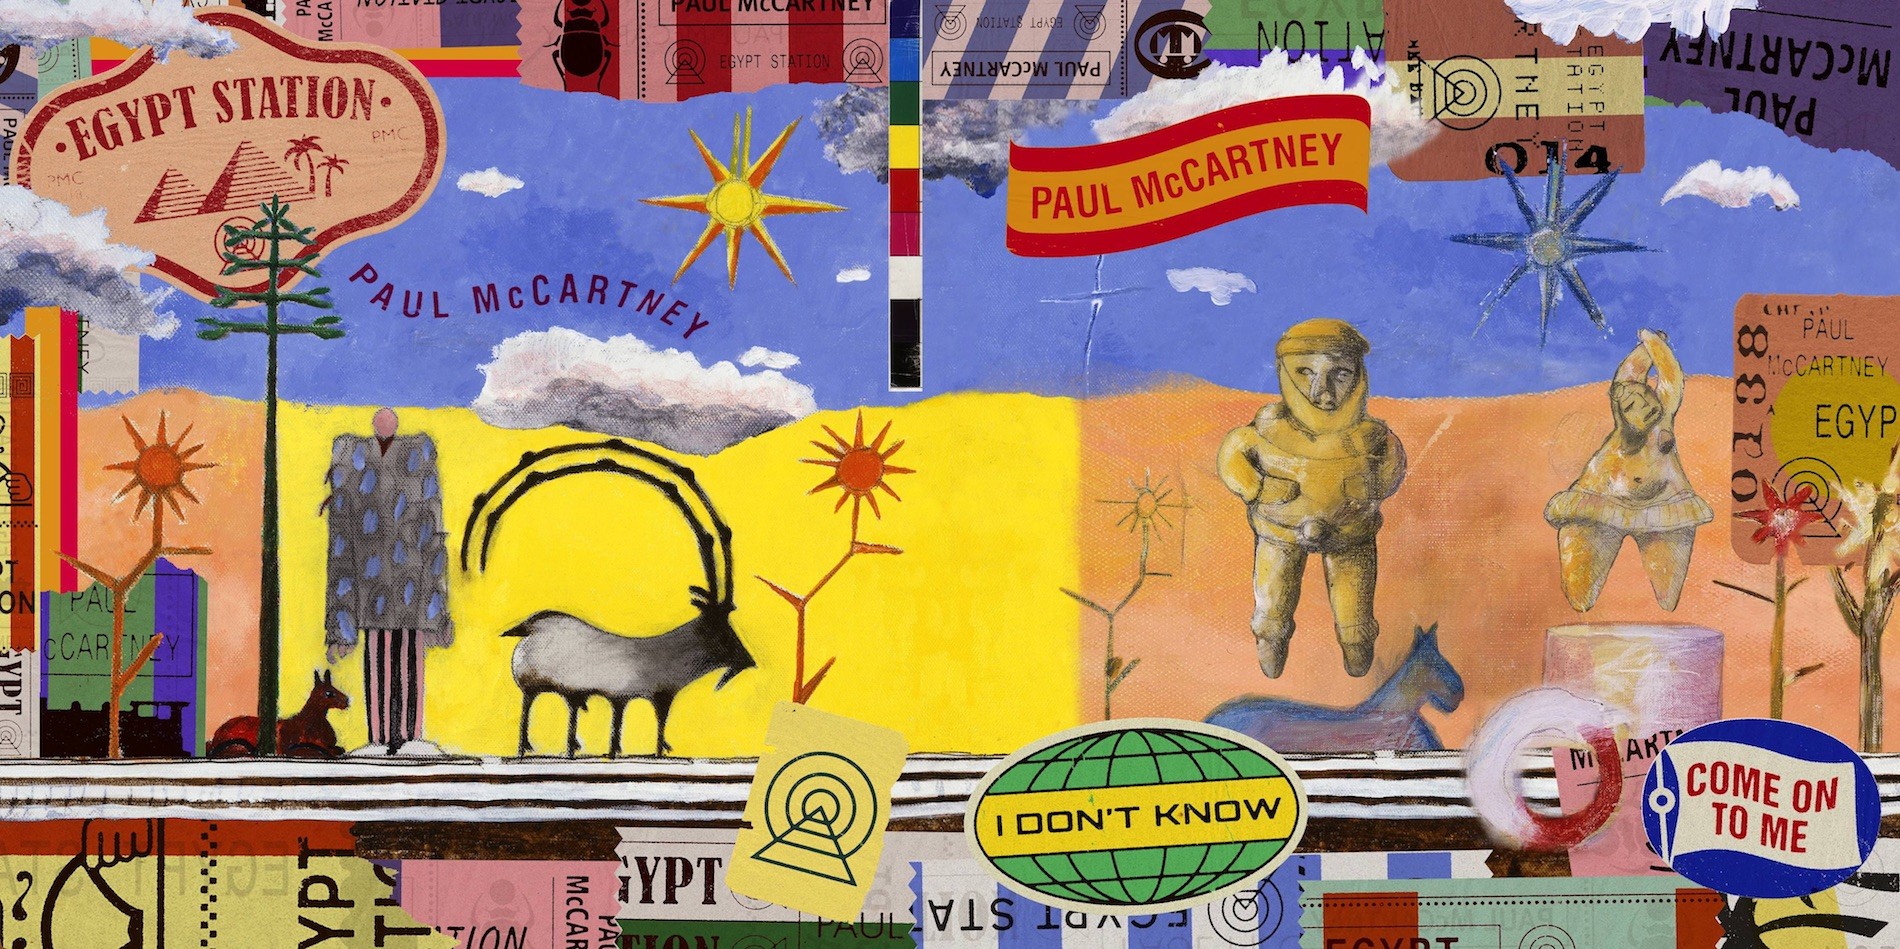 Paul-MaCartney-Egyp-Station-caratula Paul McCartney en Londres acompañado de Ringo Starr y Ronnie Wood